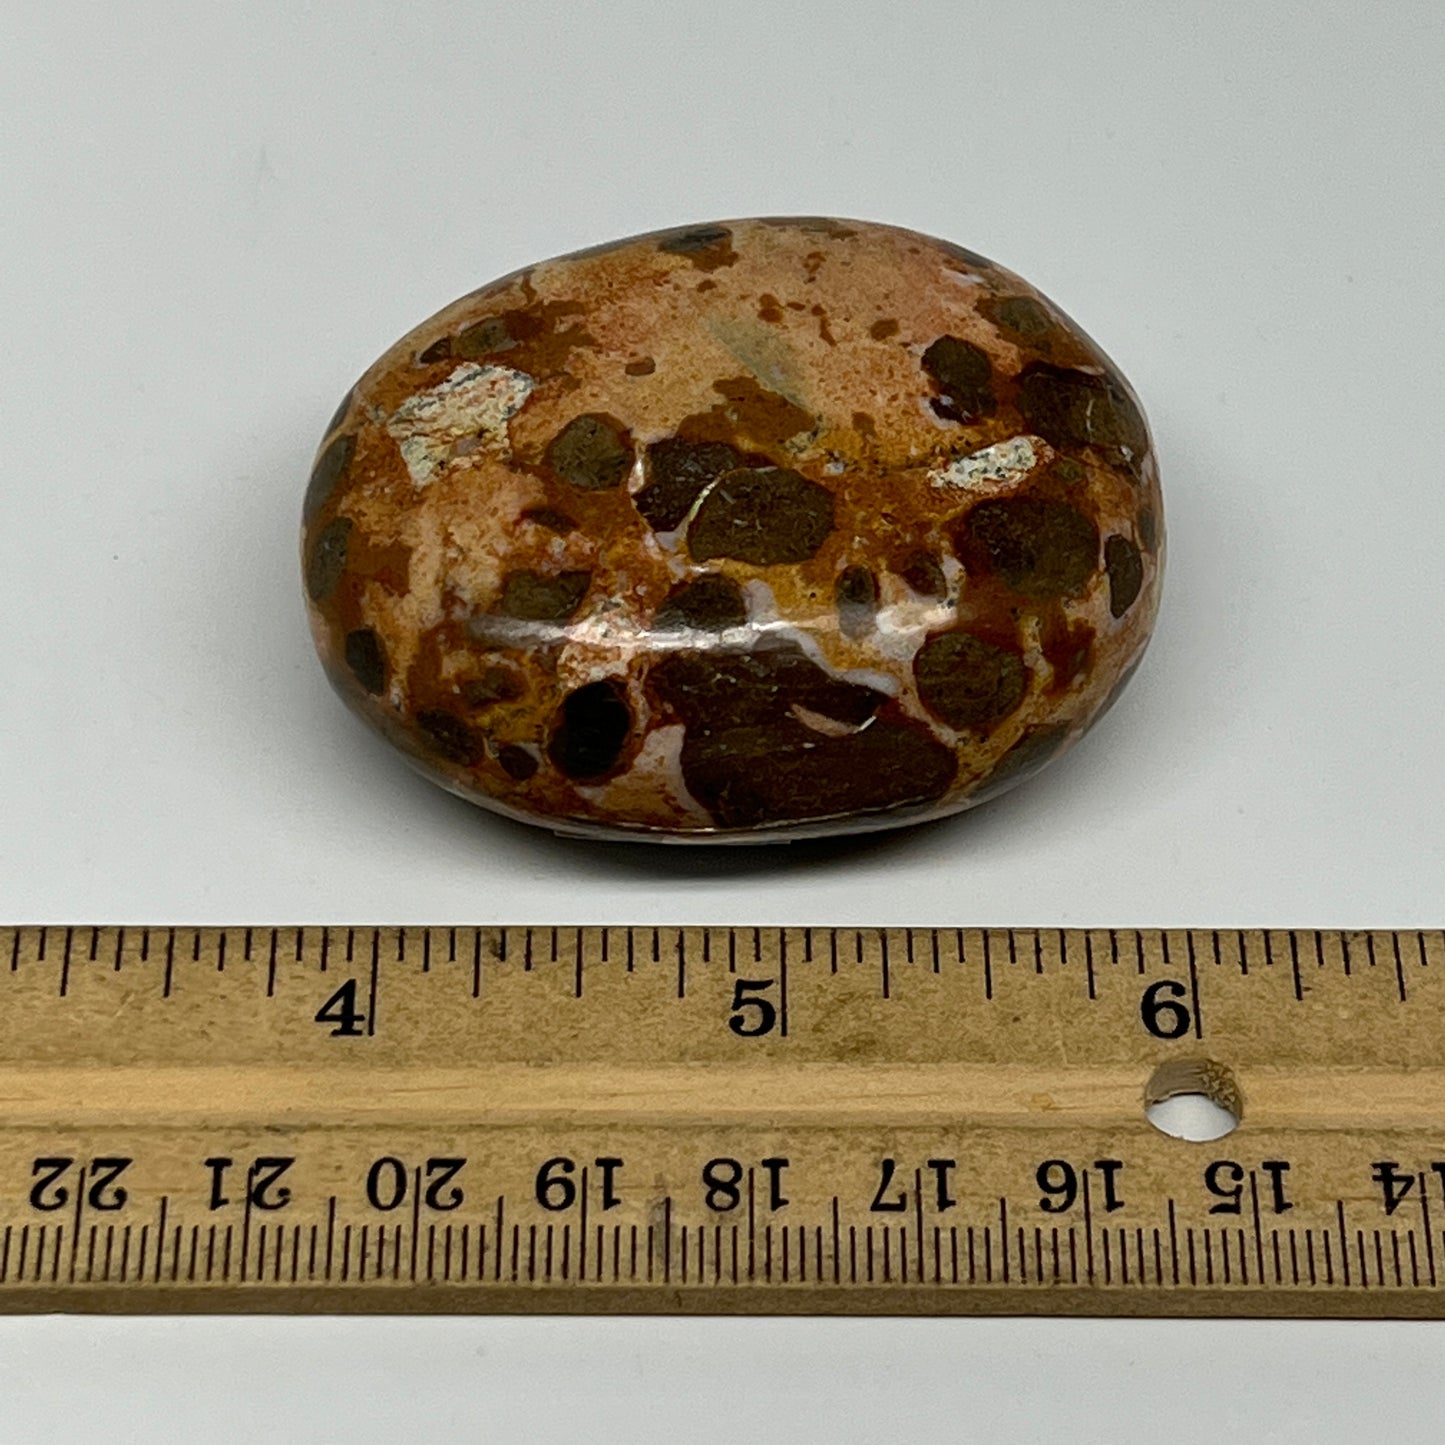 105.3g, 2.2"x1.7"x1", Natural Fruit Jasper Palm-Stone Gemstone @India, B21888